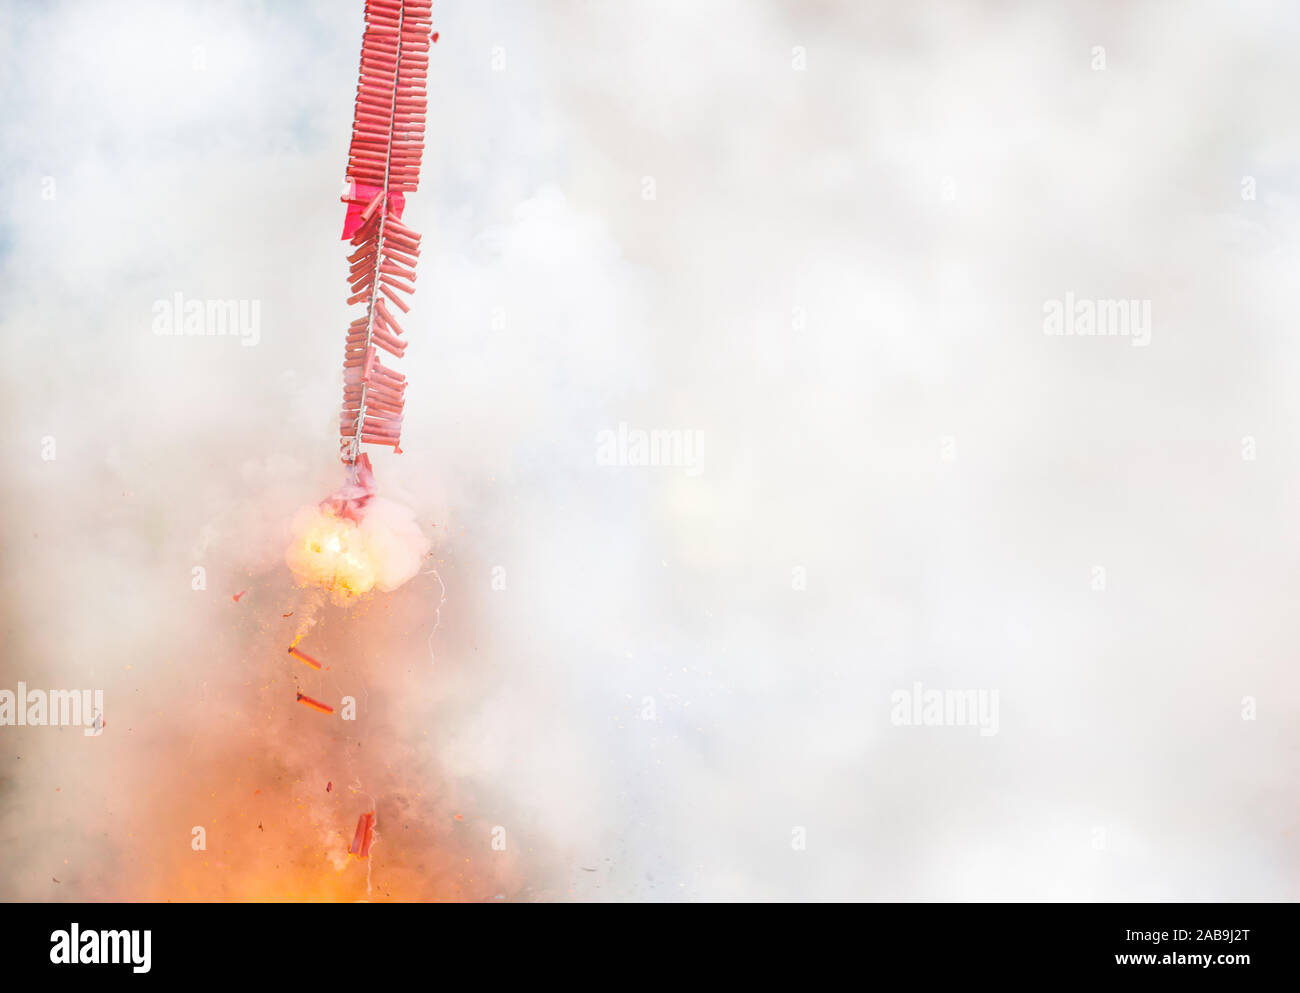 Chinese New Year Firecrackers on Exploding, Chinese Fireworks Celebration Background Stock Photo